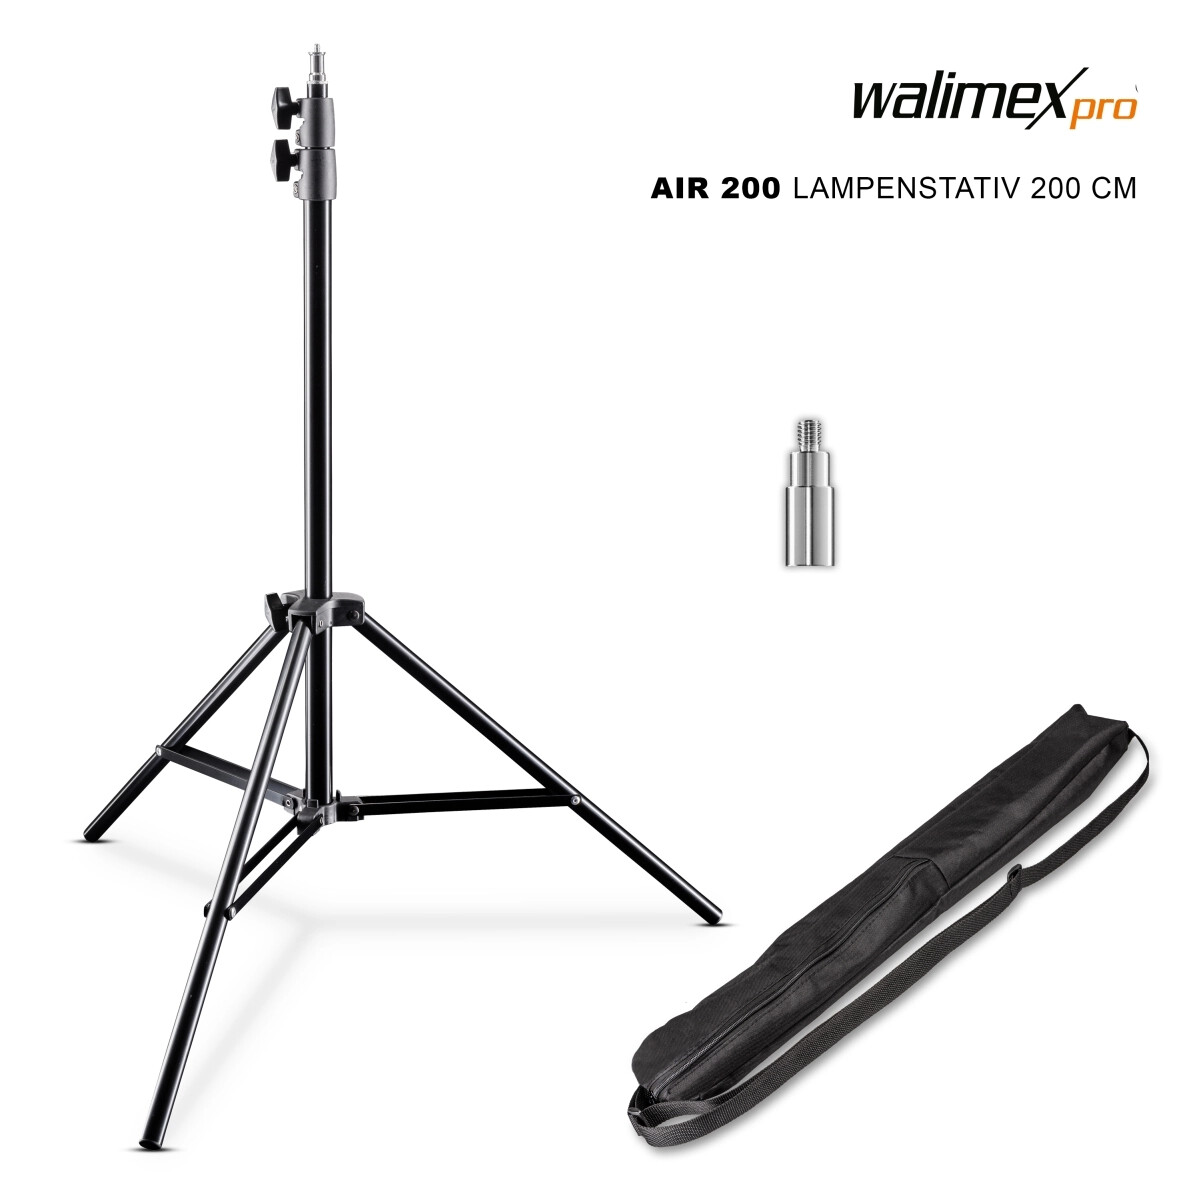 Walimex-pro-AIR-200-Lampenstativ-200-cm